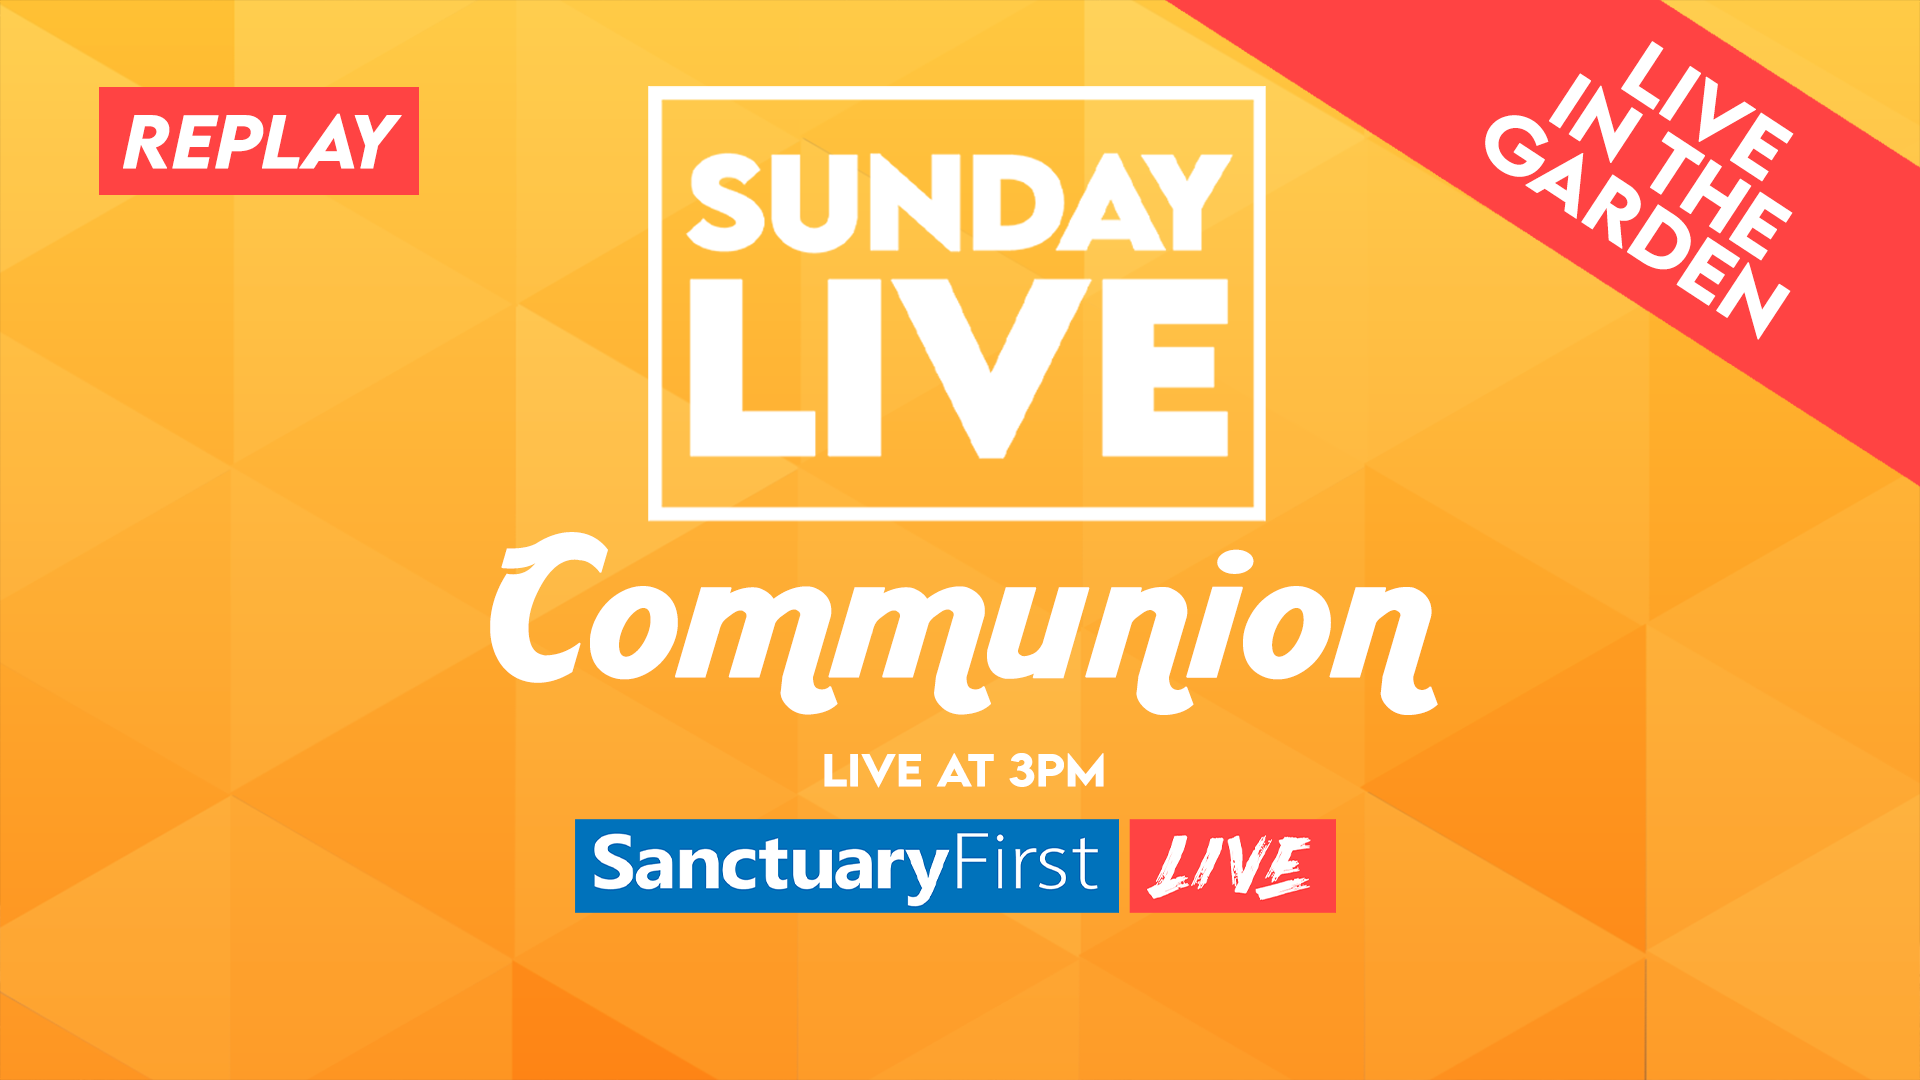 Sunday Live - Communion